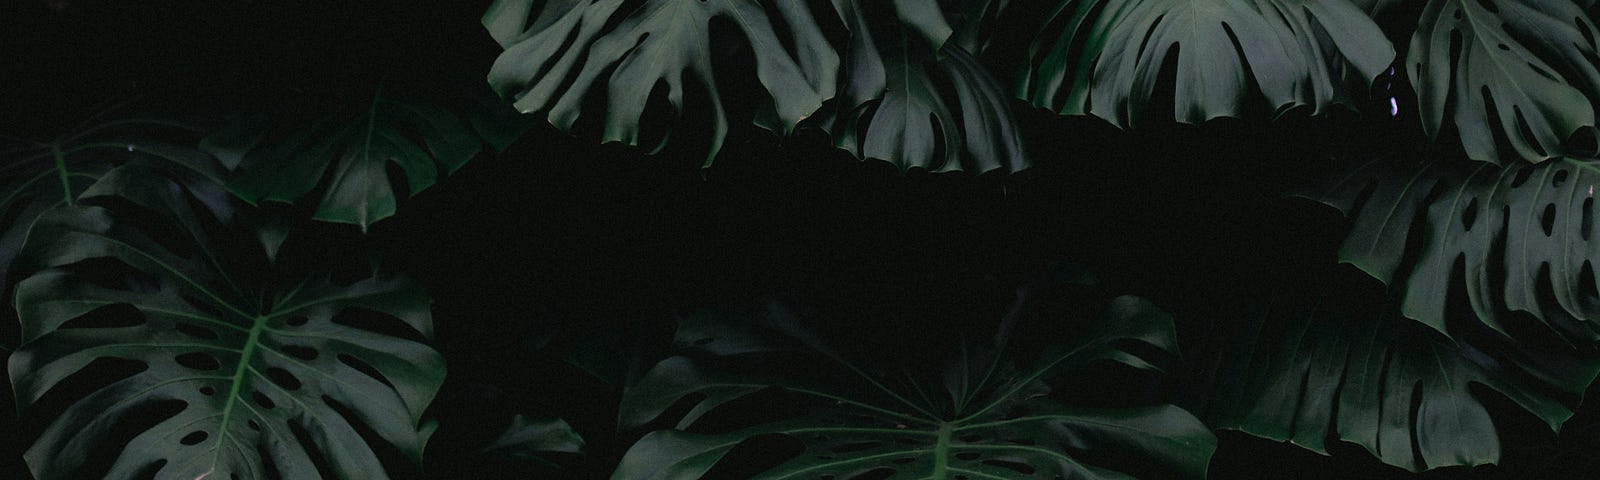 Ferns reflecting moonlight